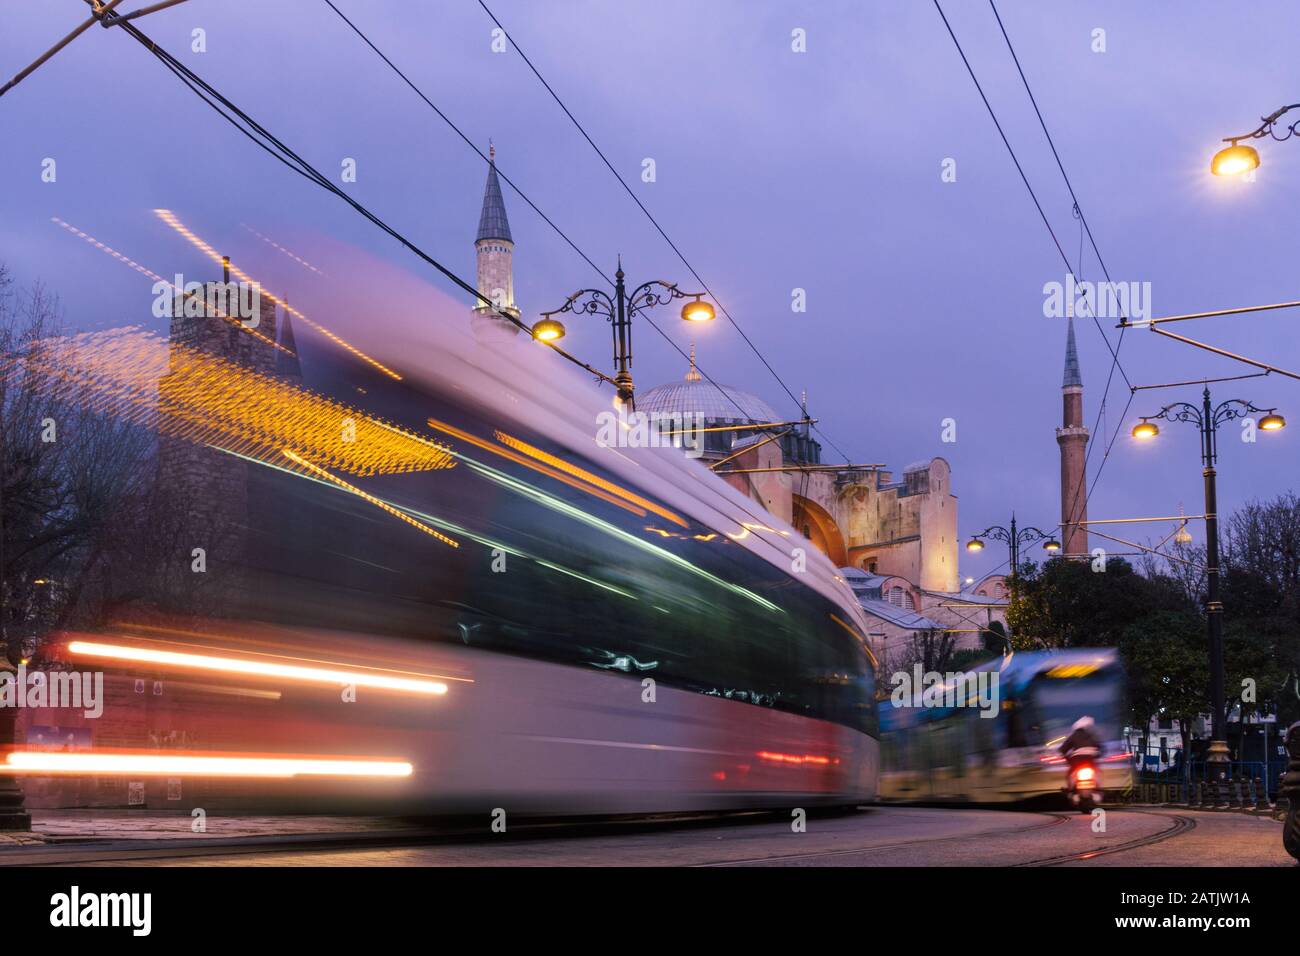 Istanbul, Turkey - Jan 9, 2020: A T1 tram passes the Hagia Sophia museum at dusk, Istanbul, Turkey Stock Photo